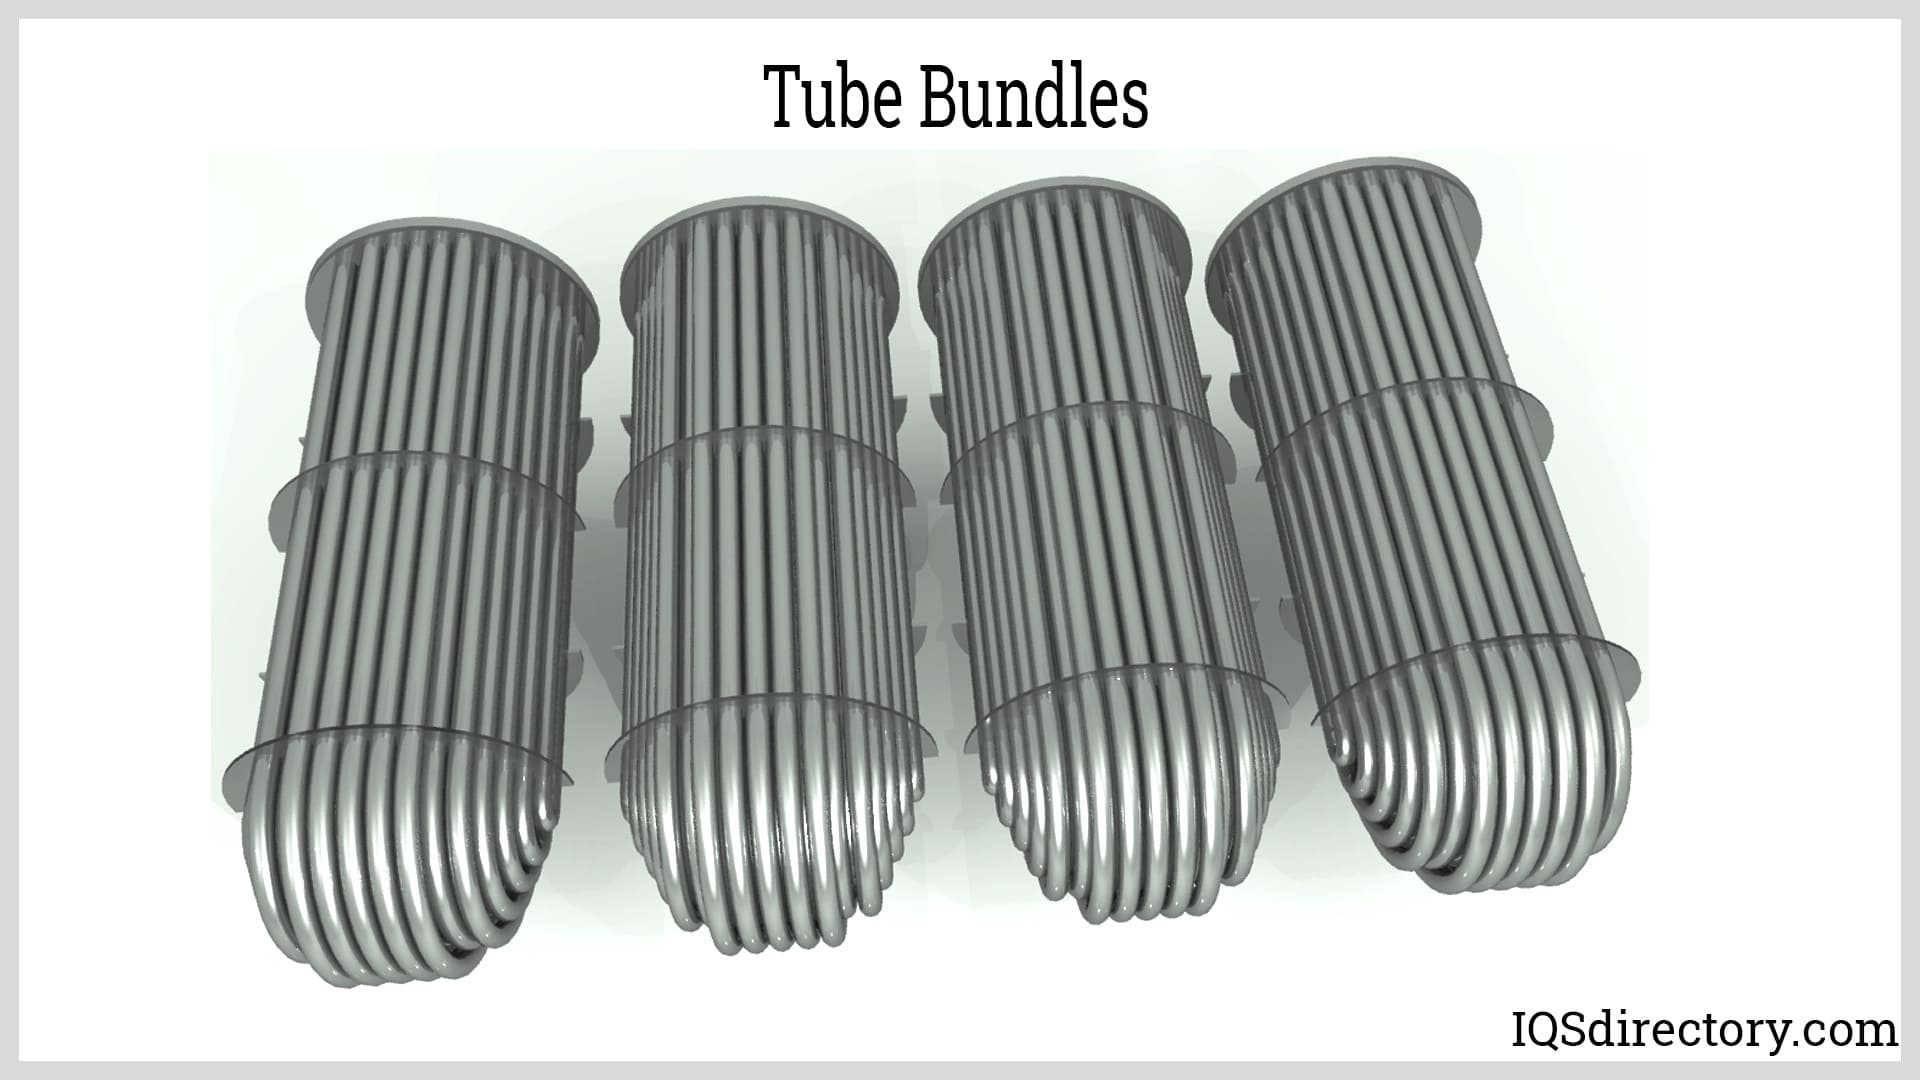 Tube Bundles